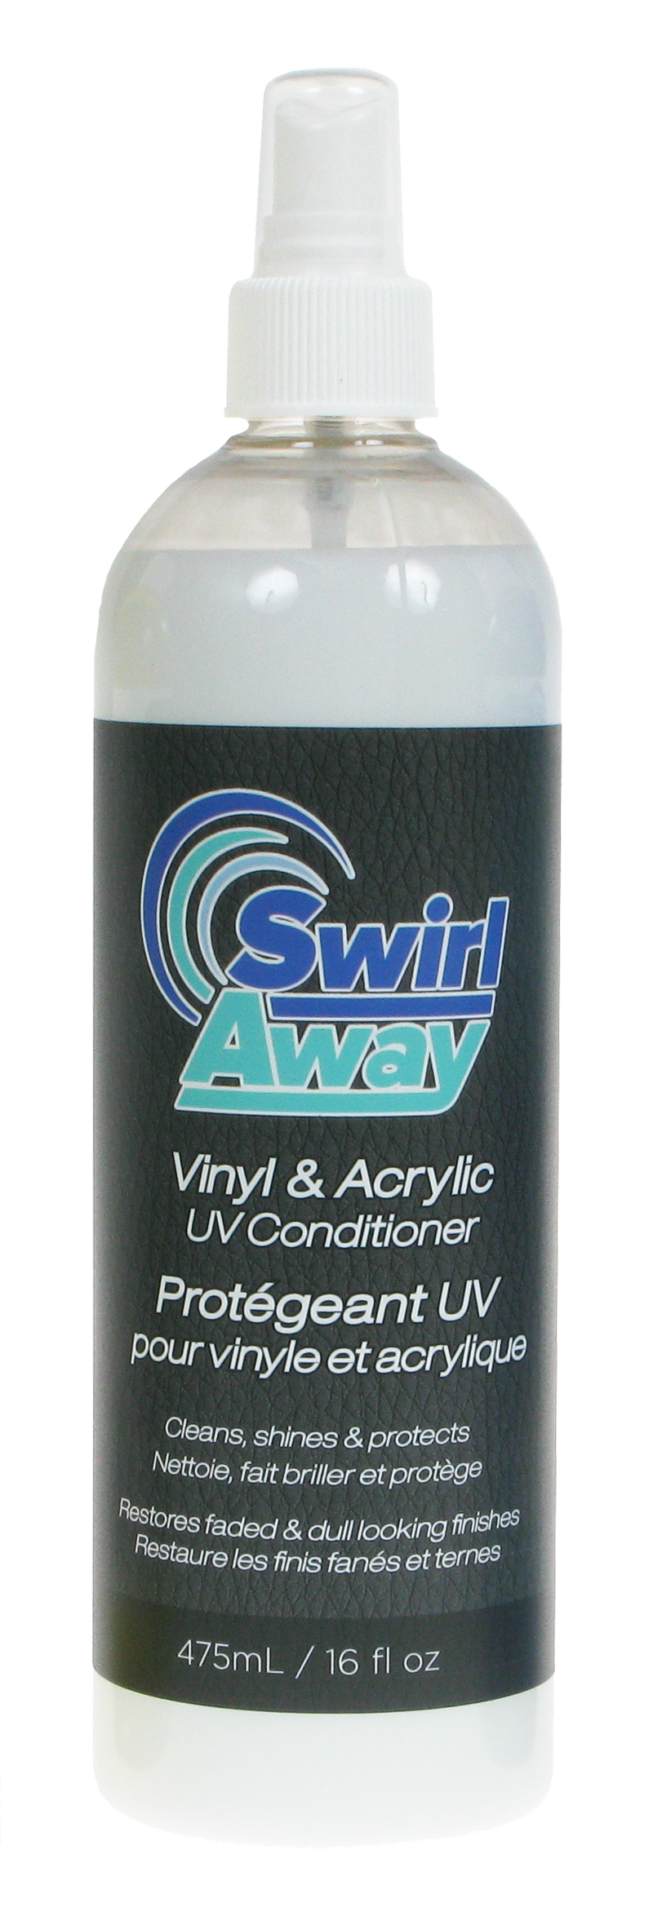 Swirl Away Vinyl Acrylic UV Conditioner 475ml - Swirl Away Vinyl & Acrylic UV Conditioner 475ml